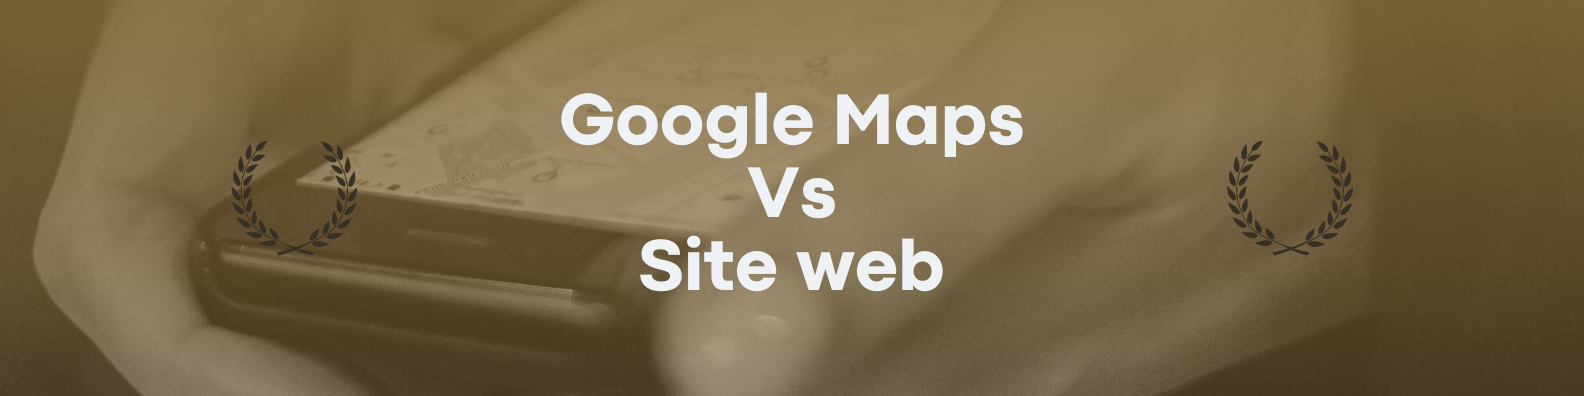 Google Maps Google My Business vs Site Web